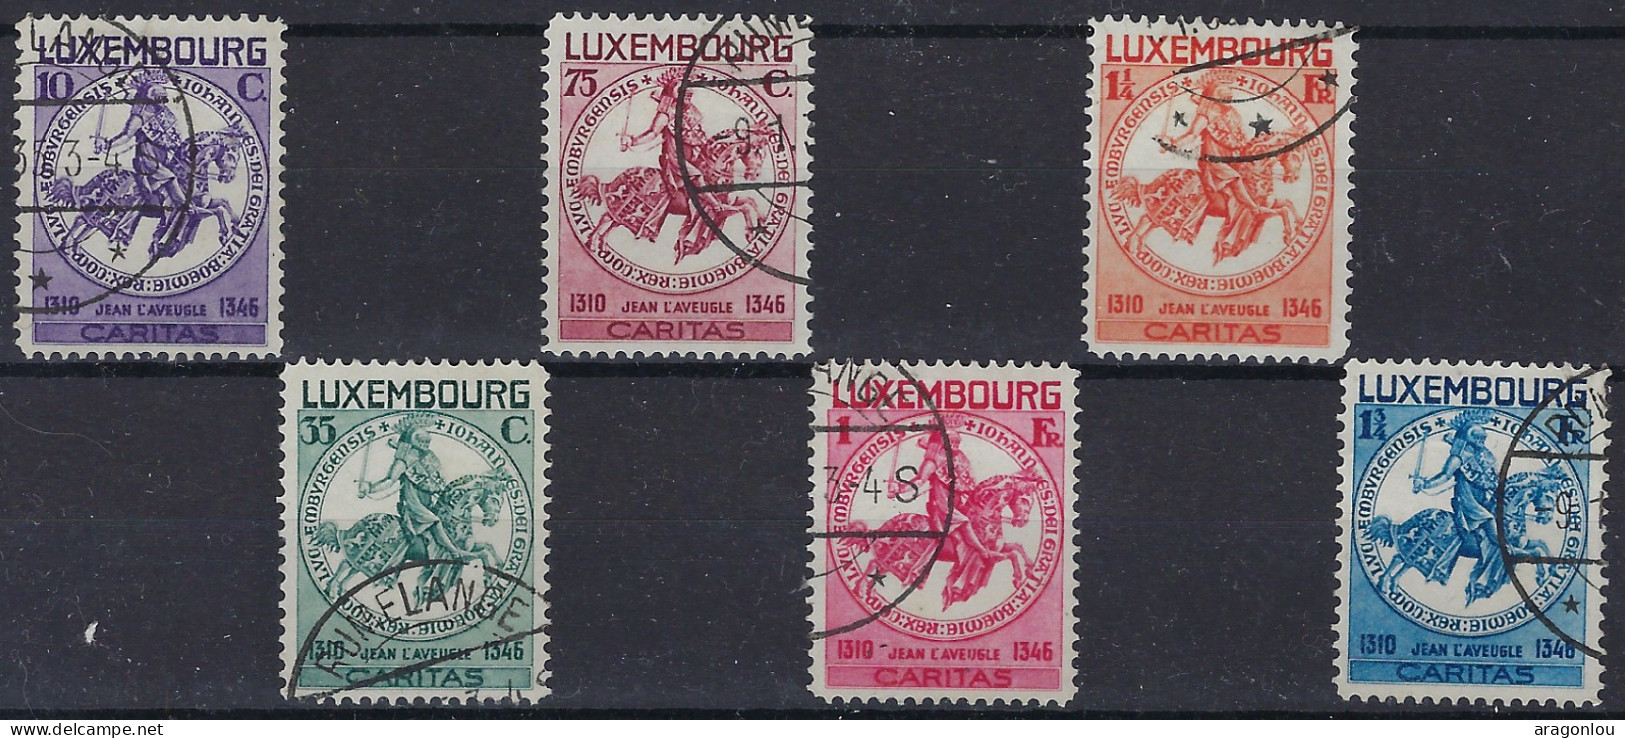 Luxembourg - Luxemburg - Timbres  1934  Série    Sceau De Jean L'Aveugle    °   VC.200,- - Usados